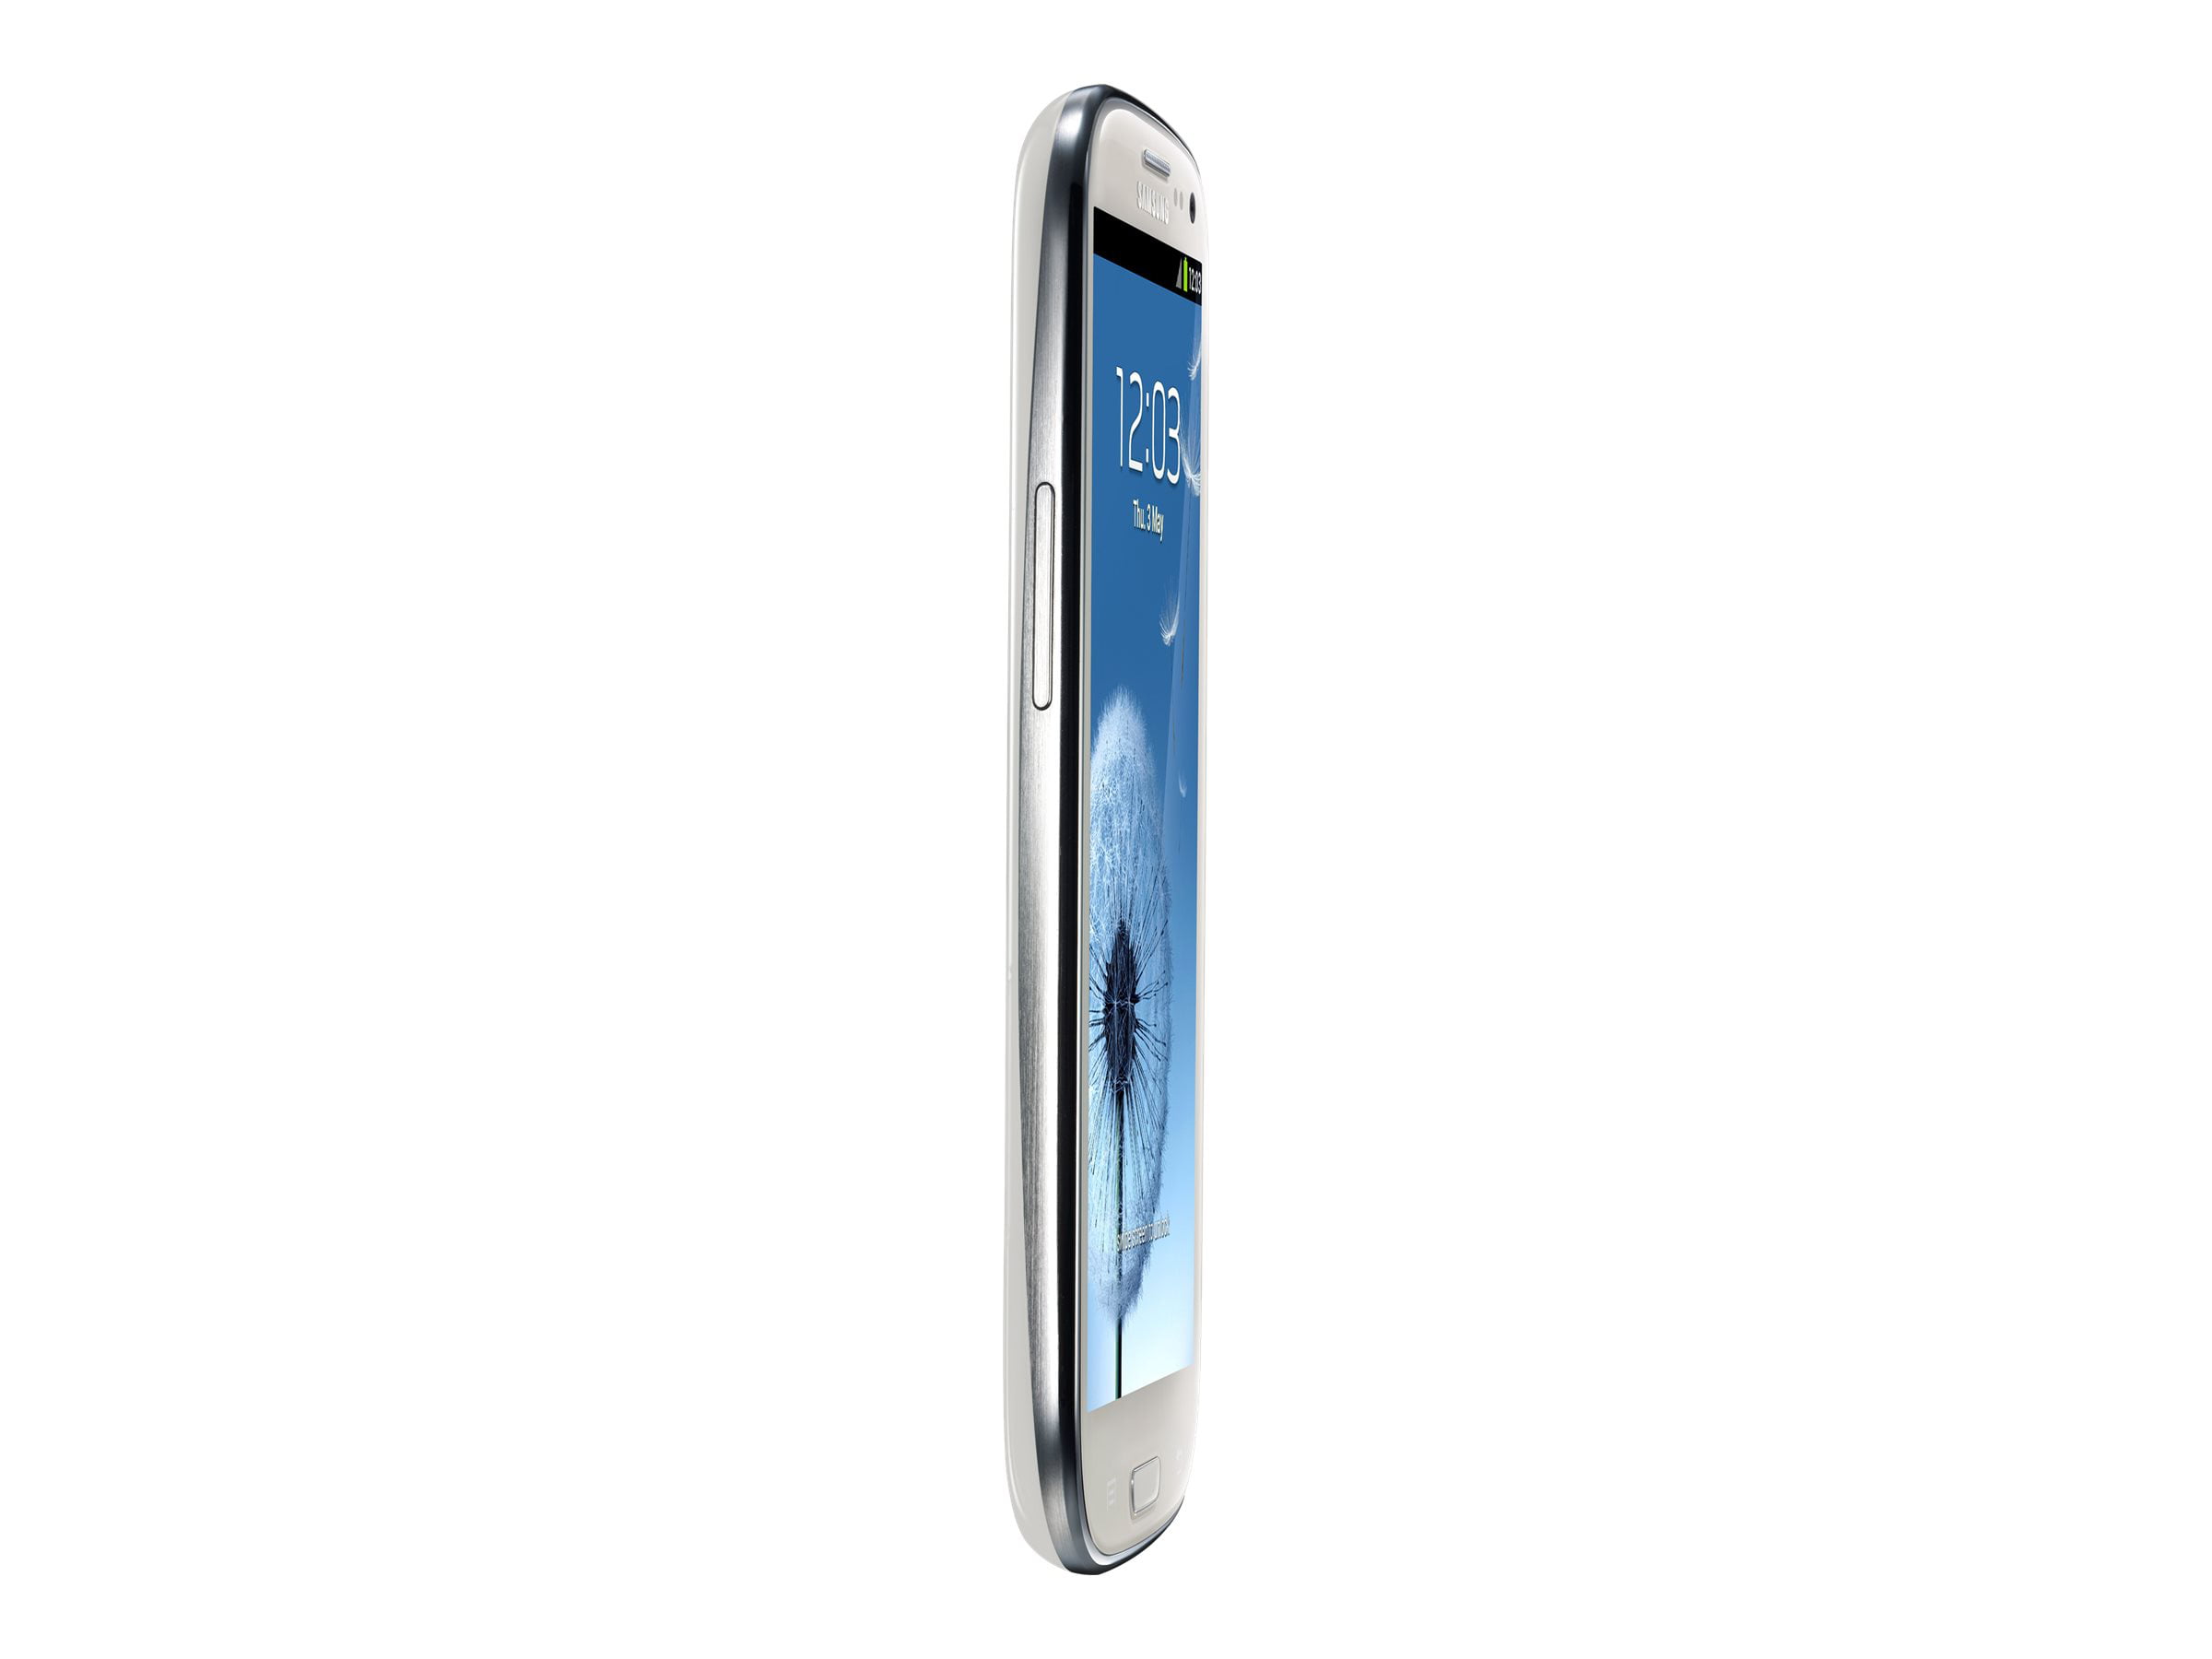 Straight Talk SAMSUNG Galaxy S3, 16GB White - Prepaid Smartphone 